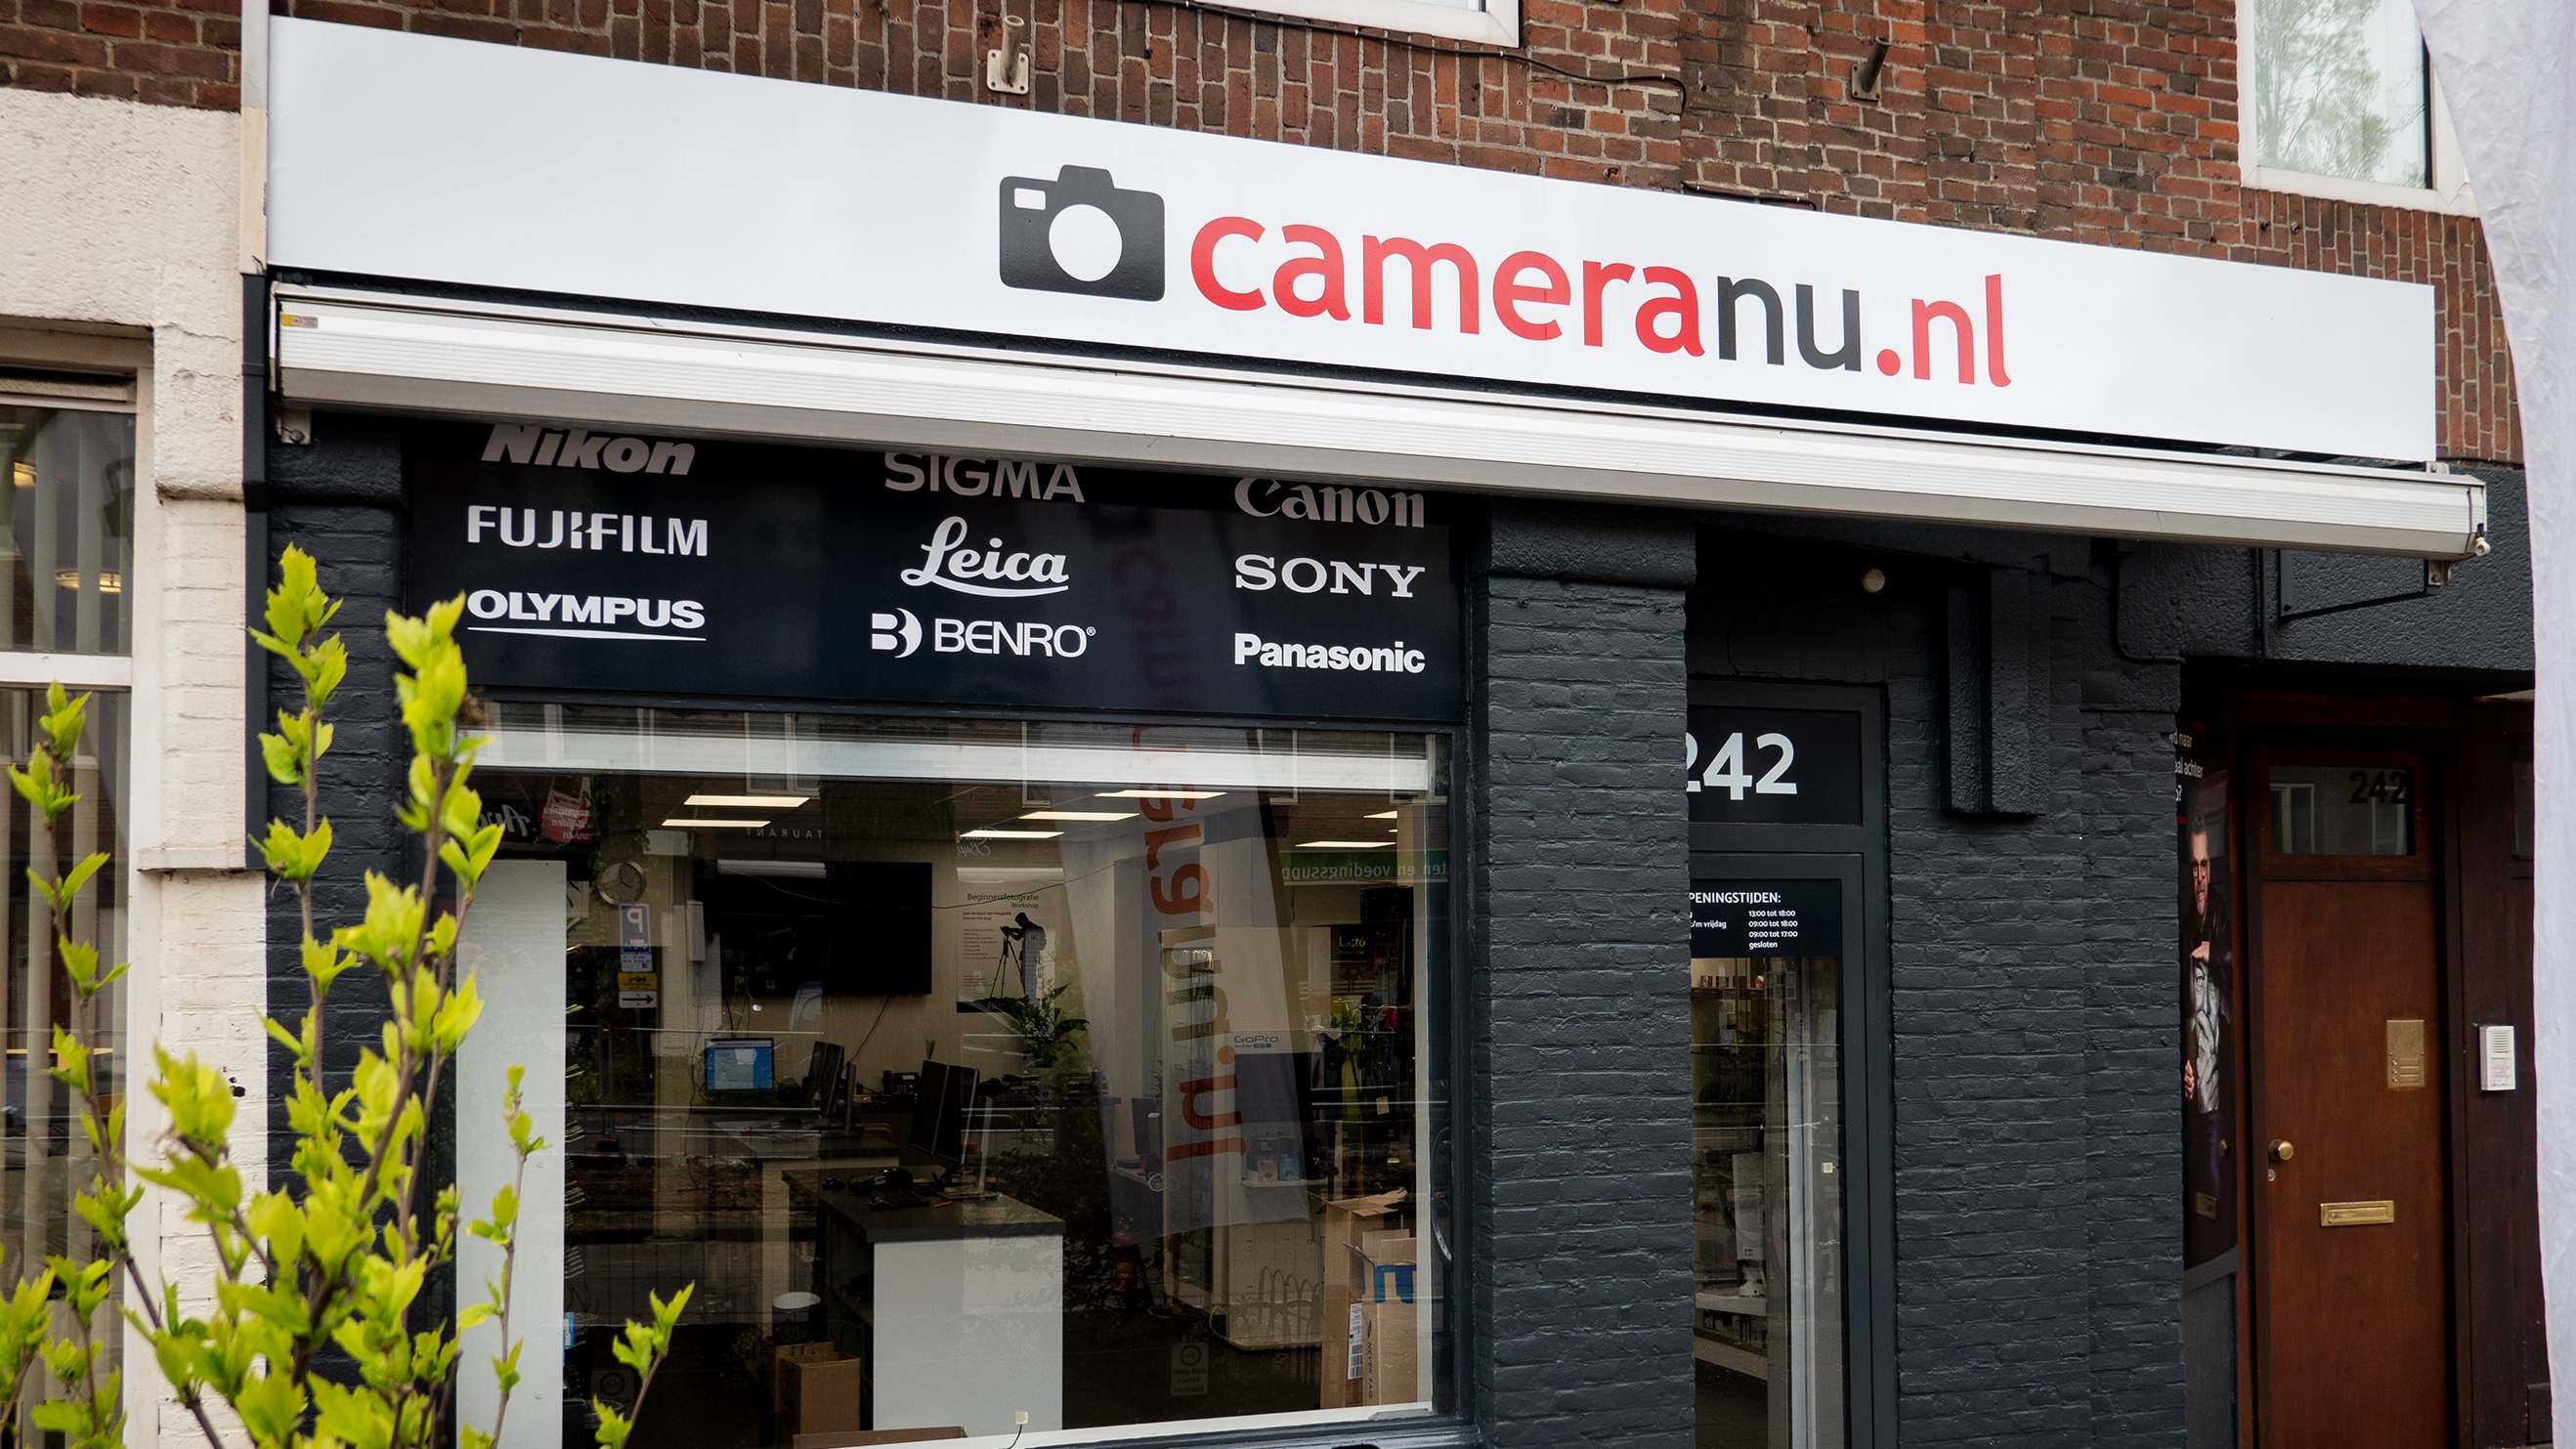 CameraNU.nl krijgt plek in de hoofdstad